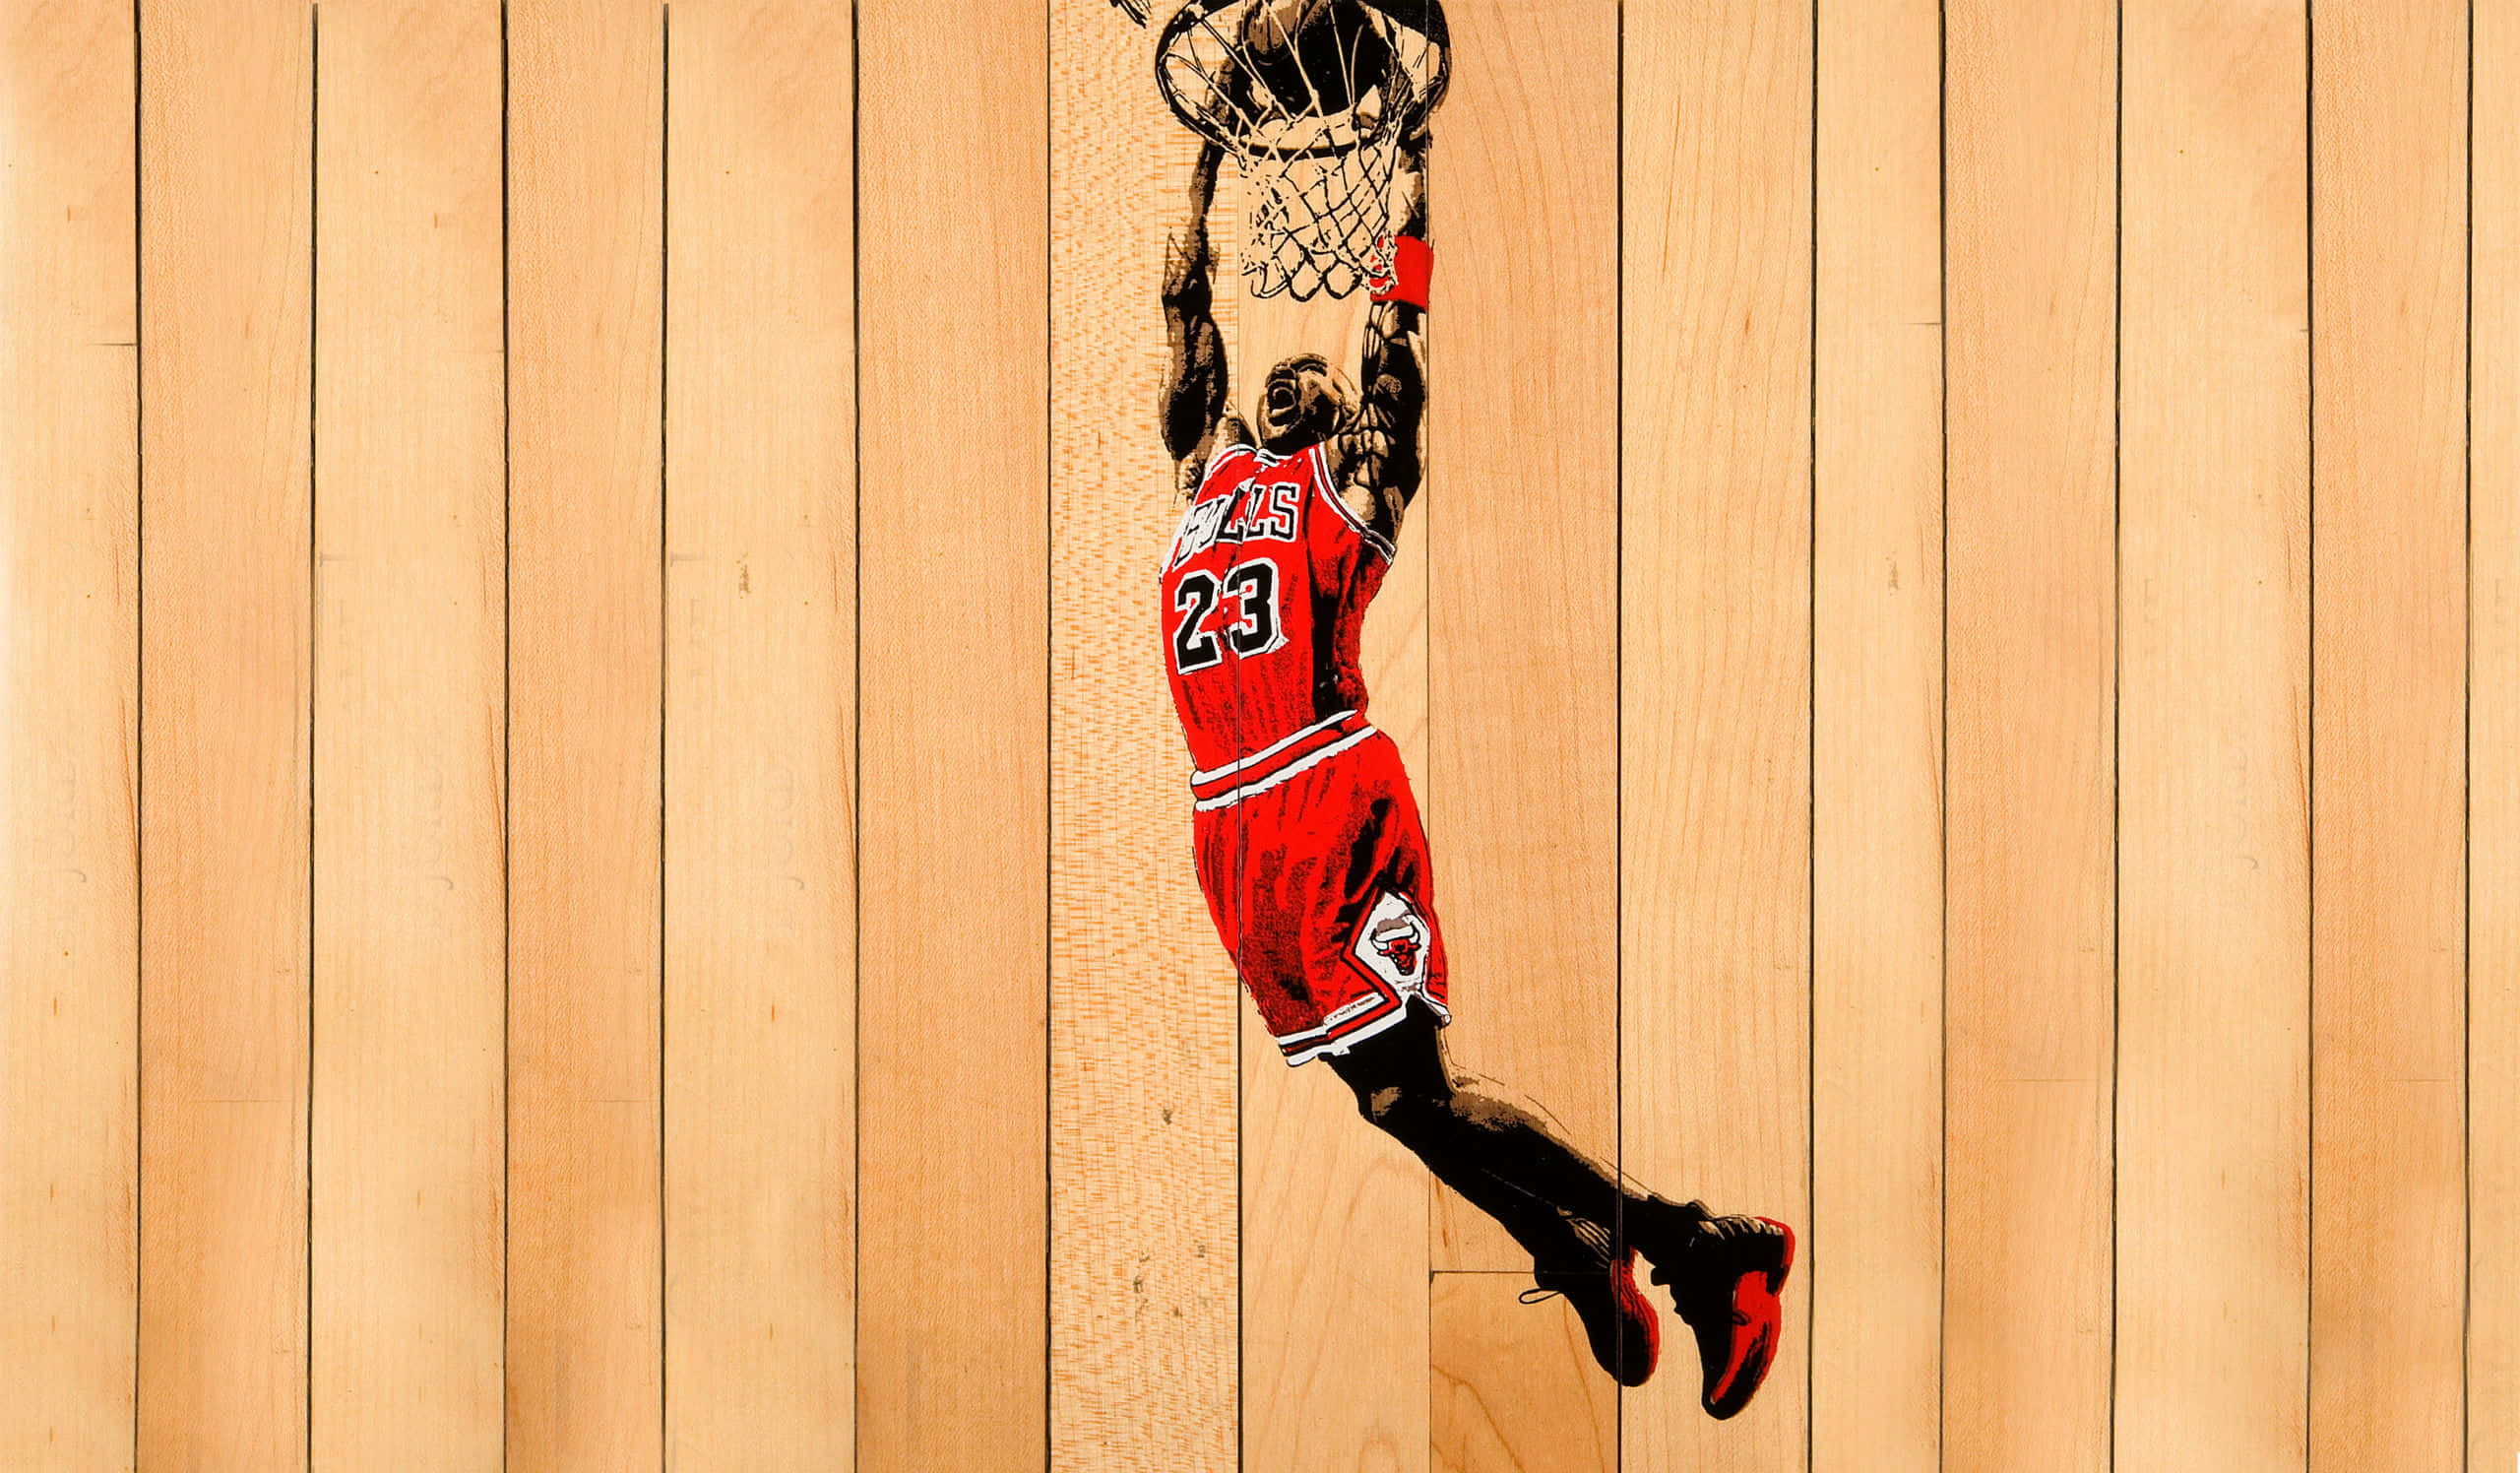 Michael Jordan delivers an electrifying dunk